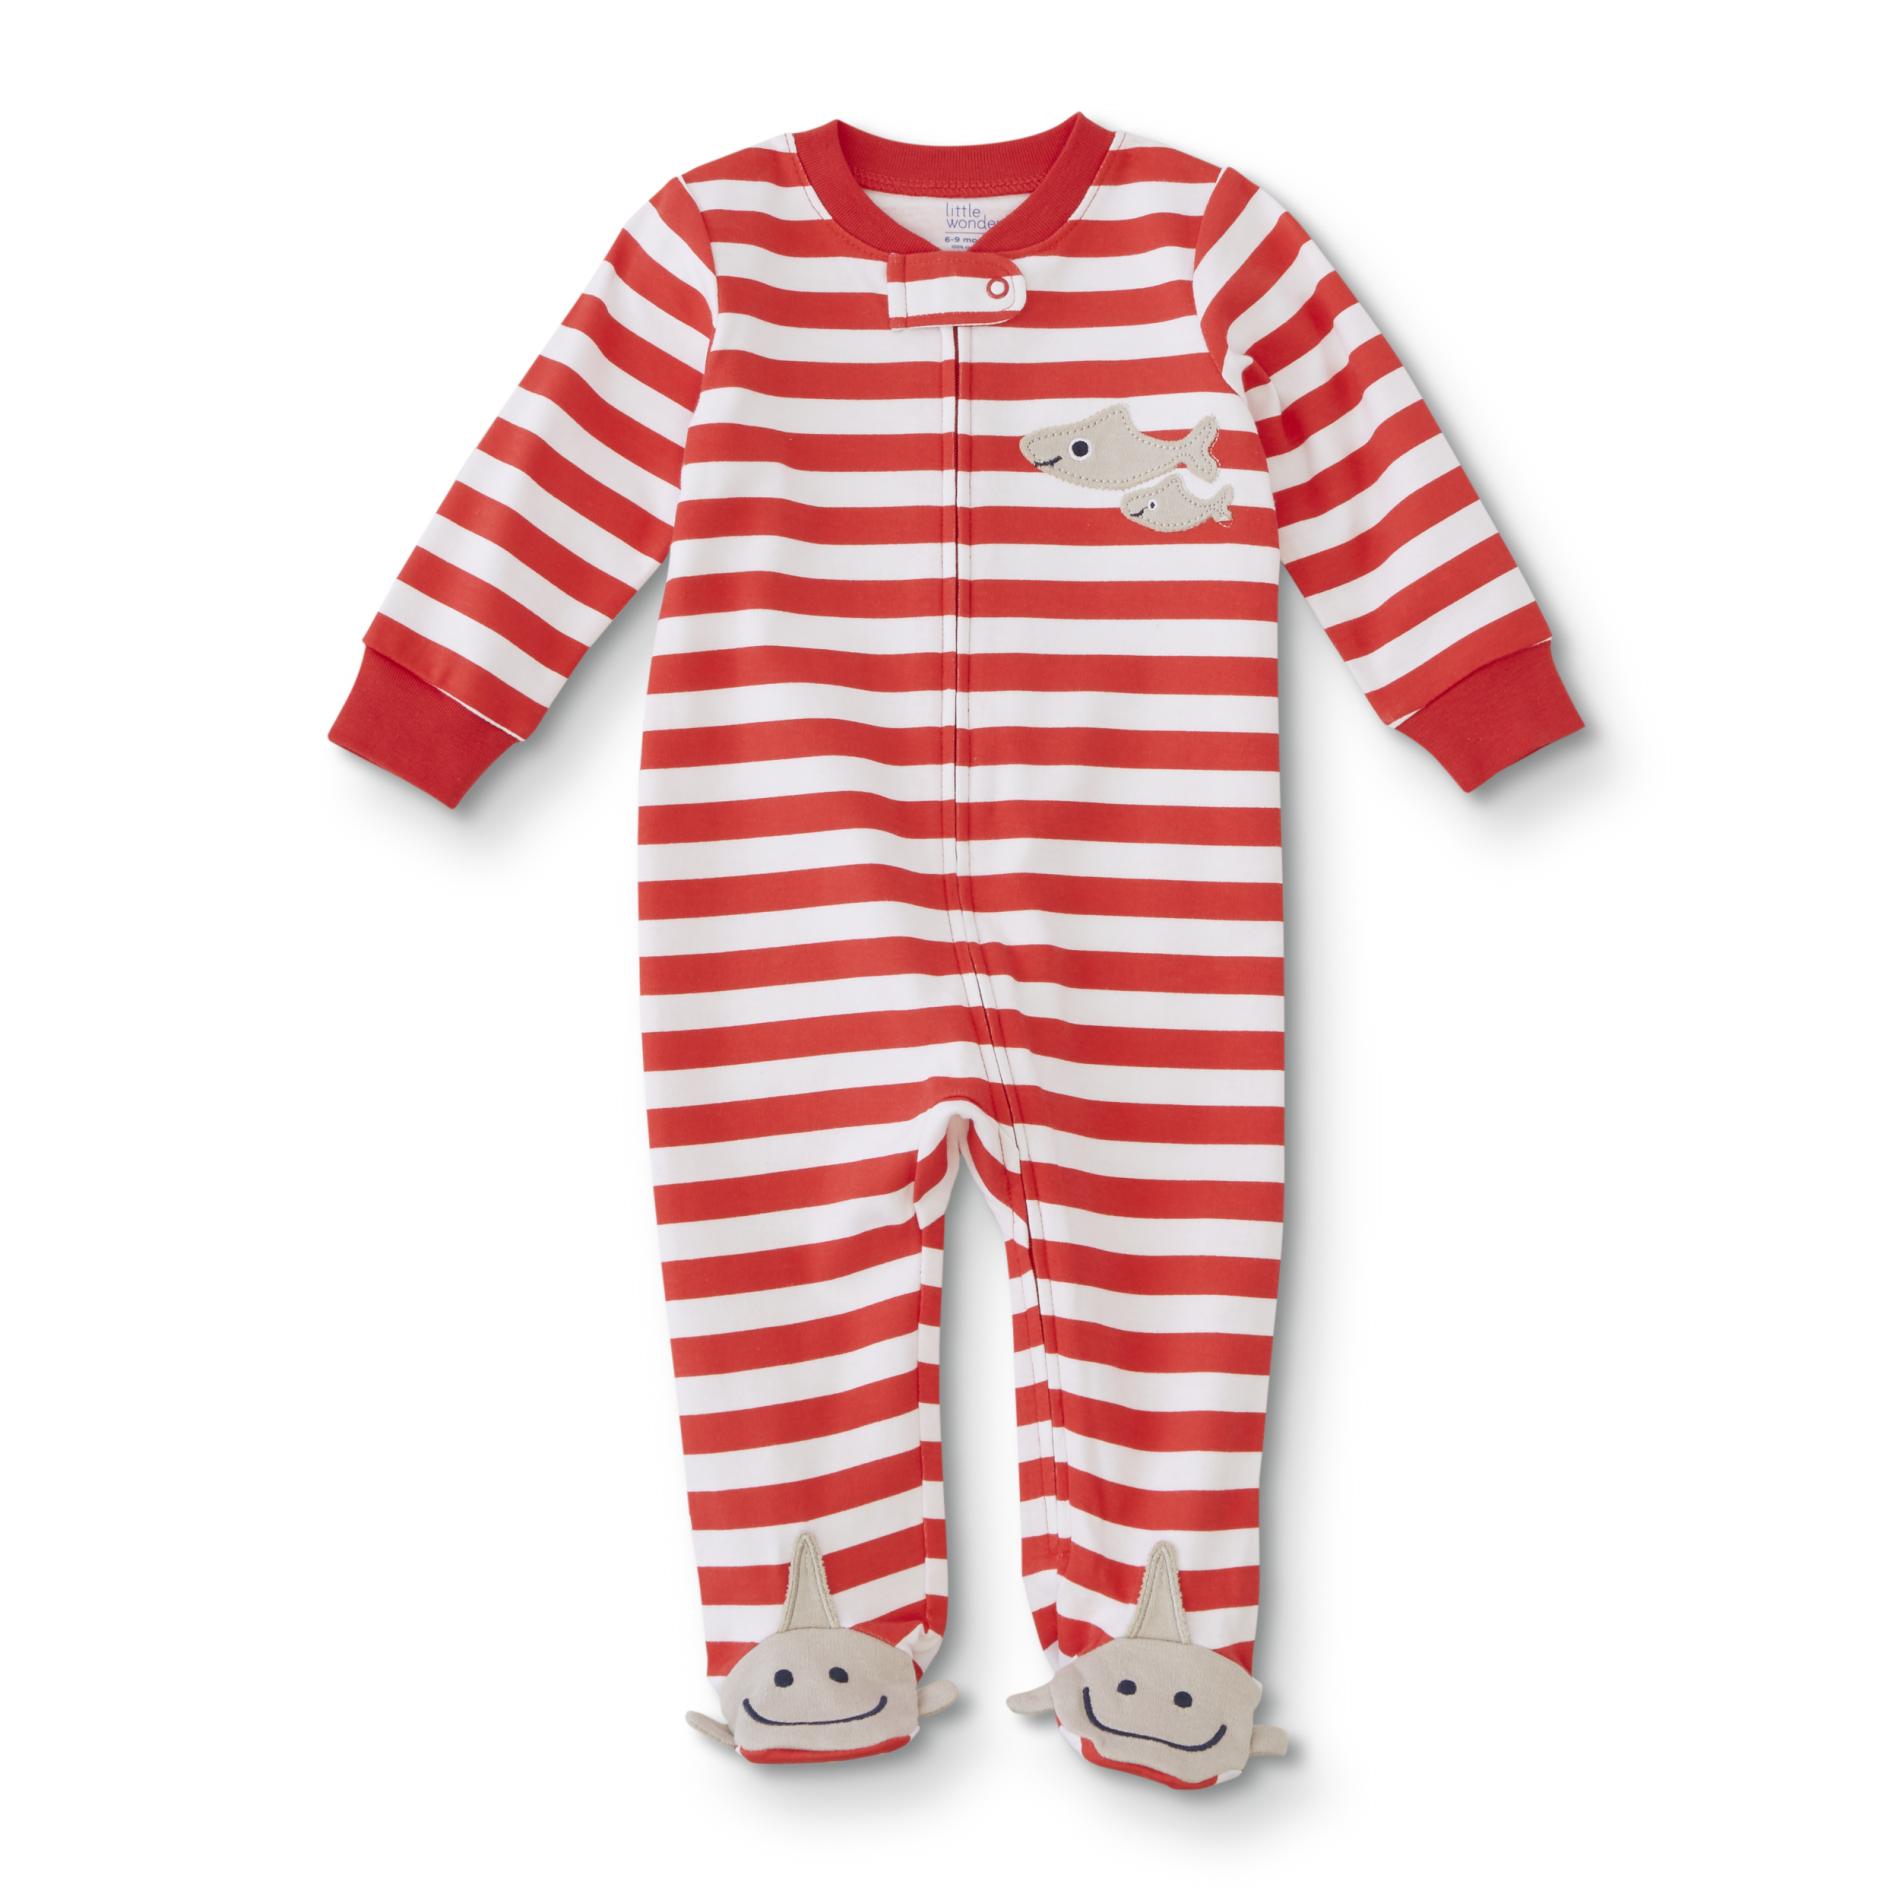 Little Wonders Infant Boys' Footed Pajamas - Shark/Striped